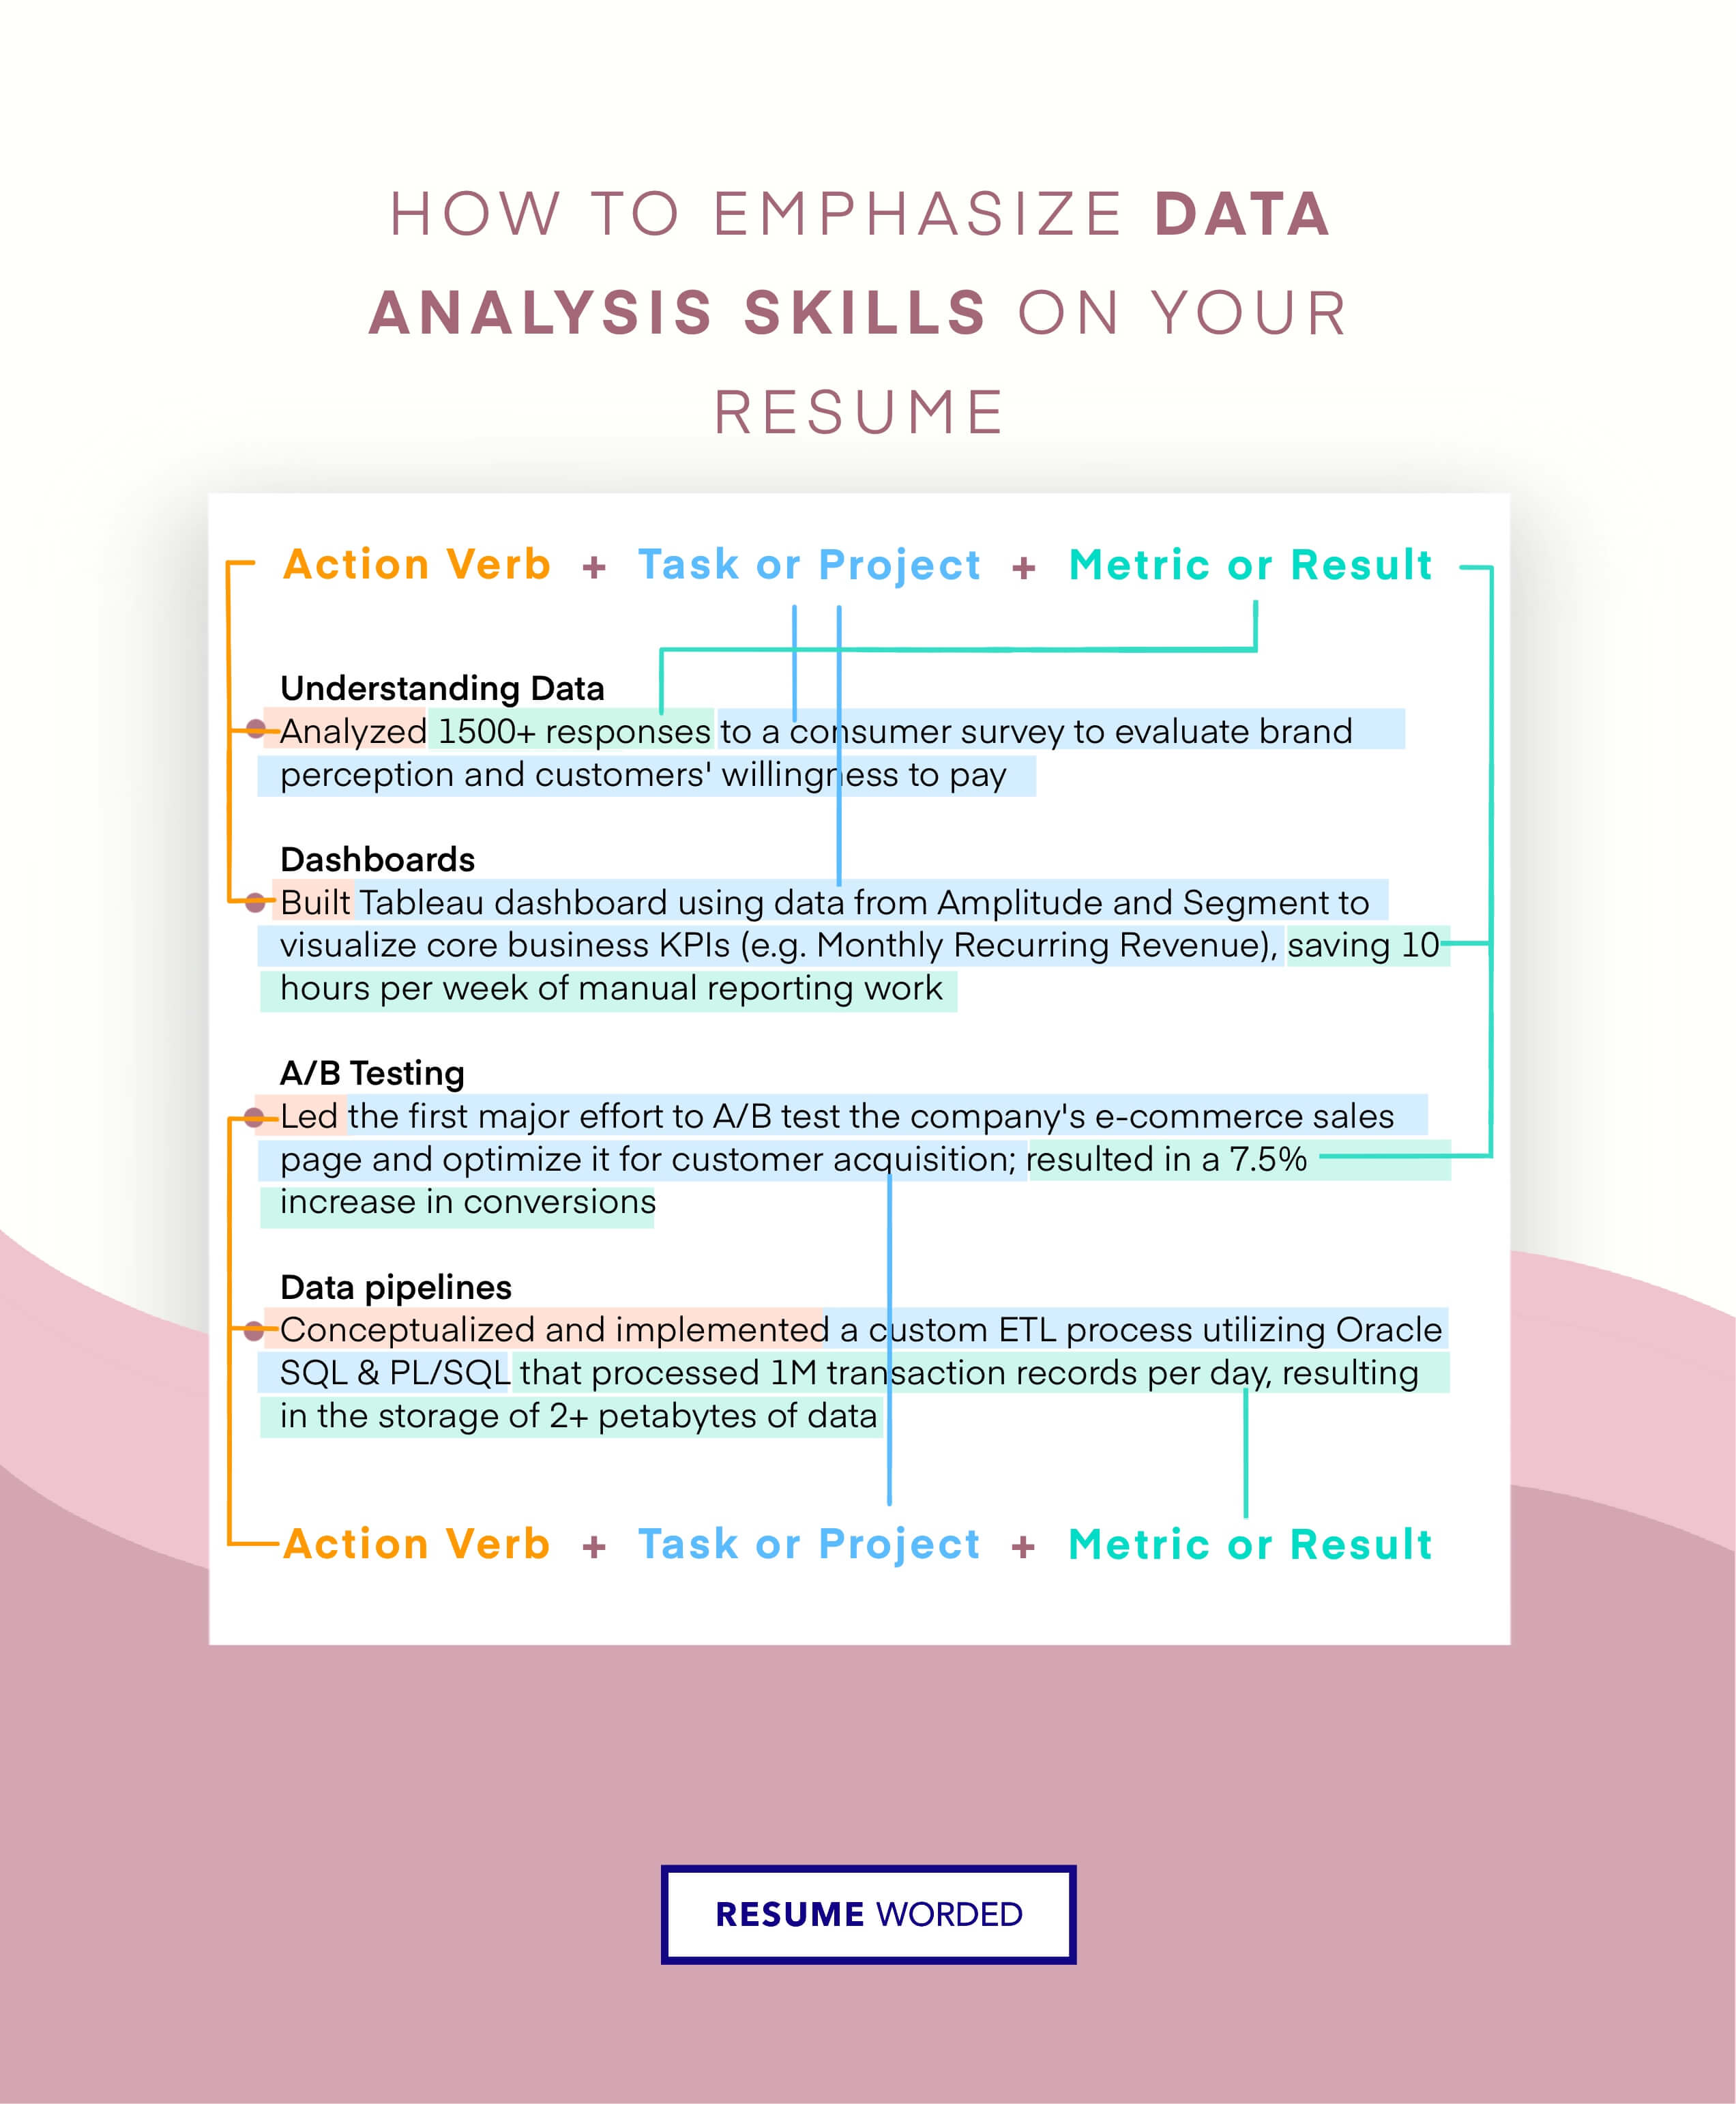 Emphasize your data analysis skills - Claims Analyst Resume